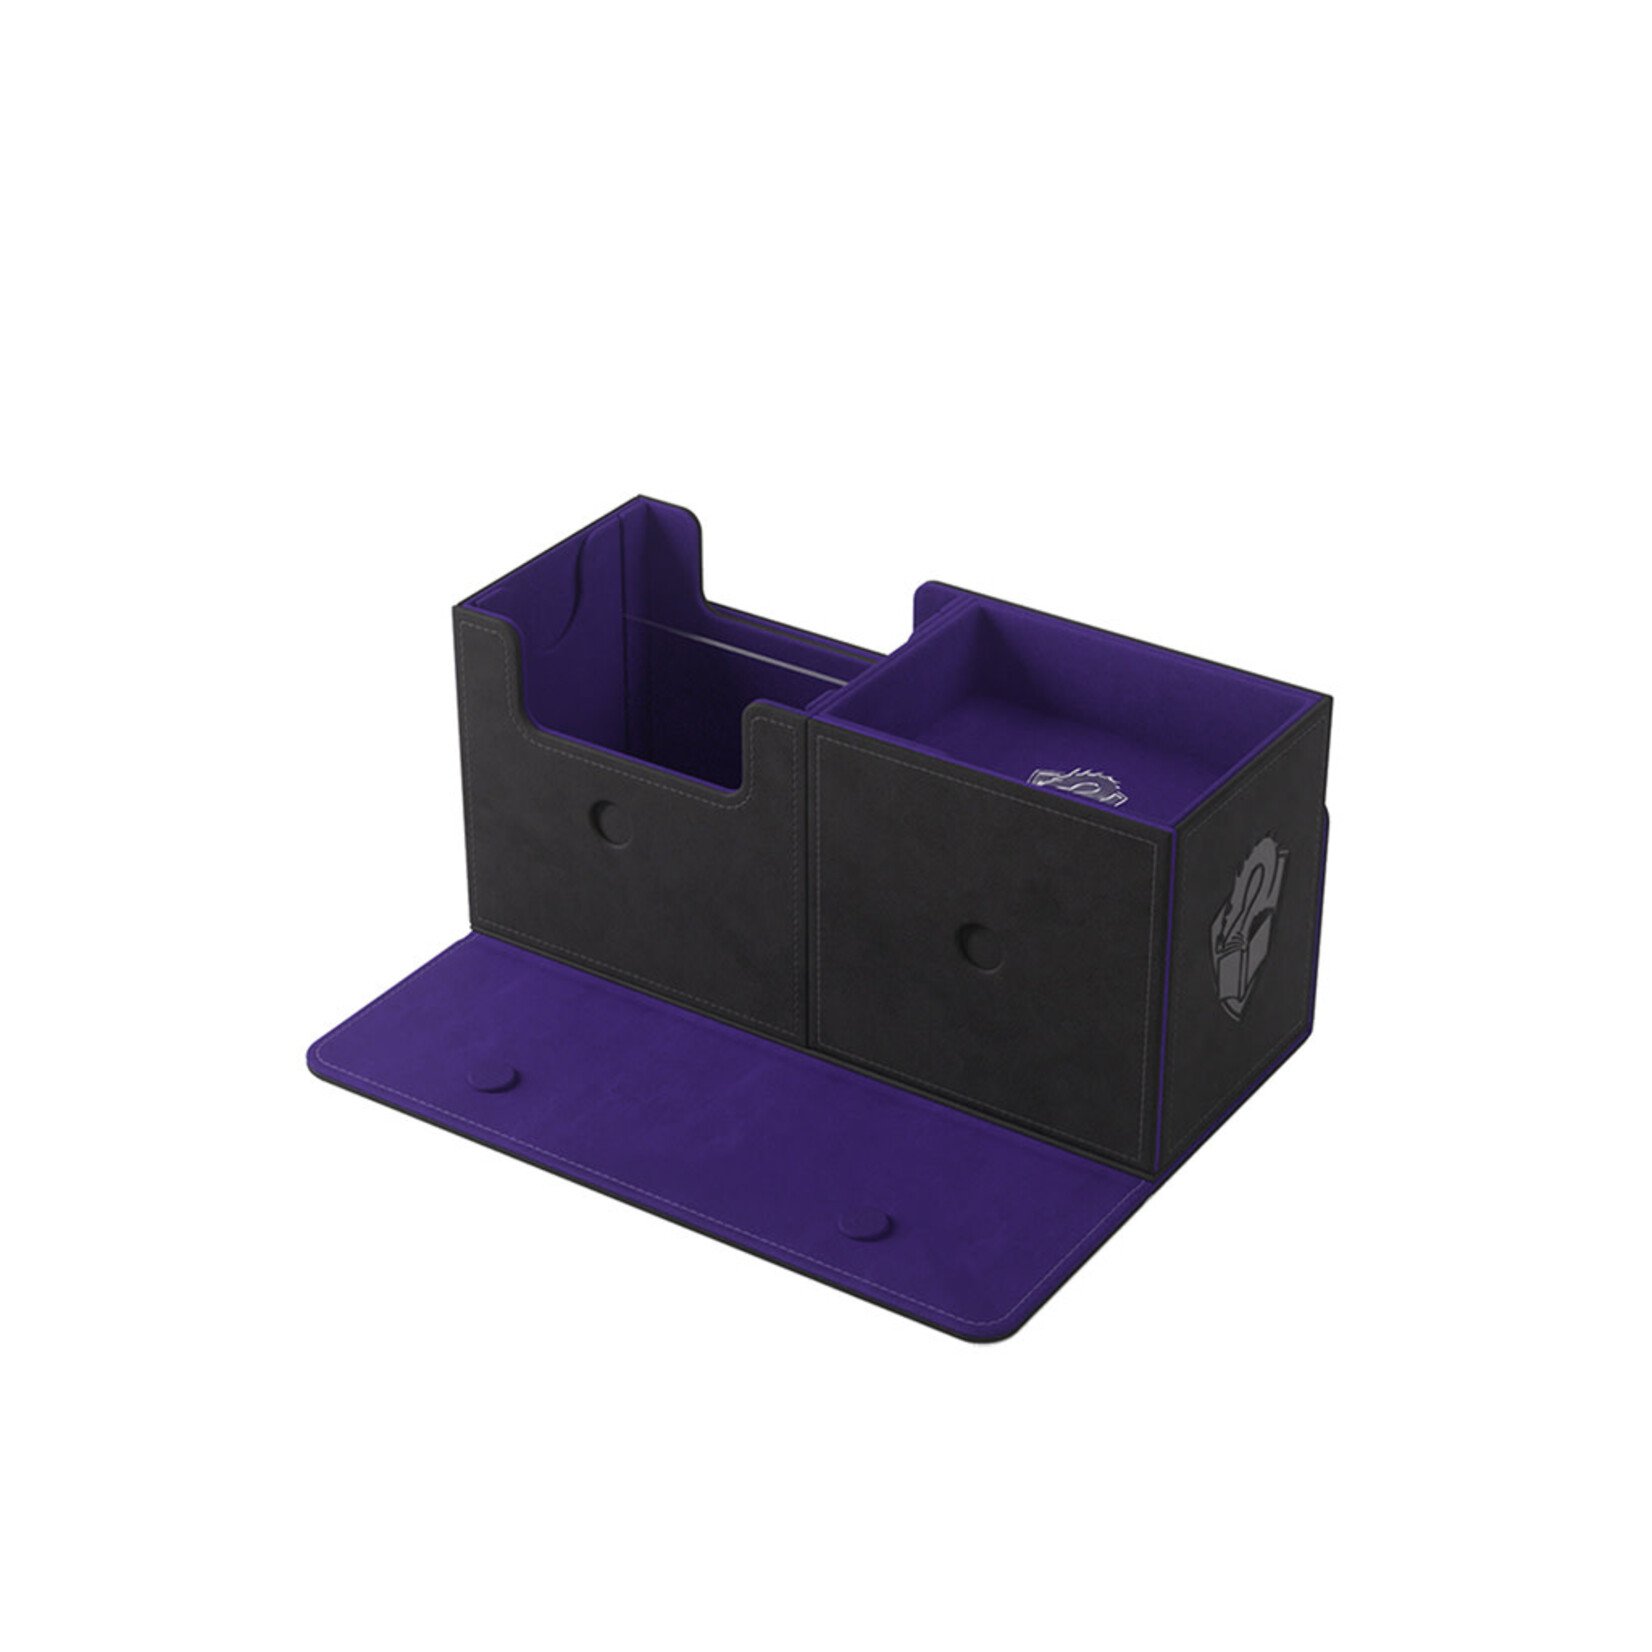 The Academic 133+ XL Black/Purple Deck Box